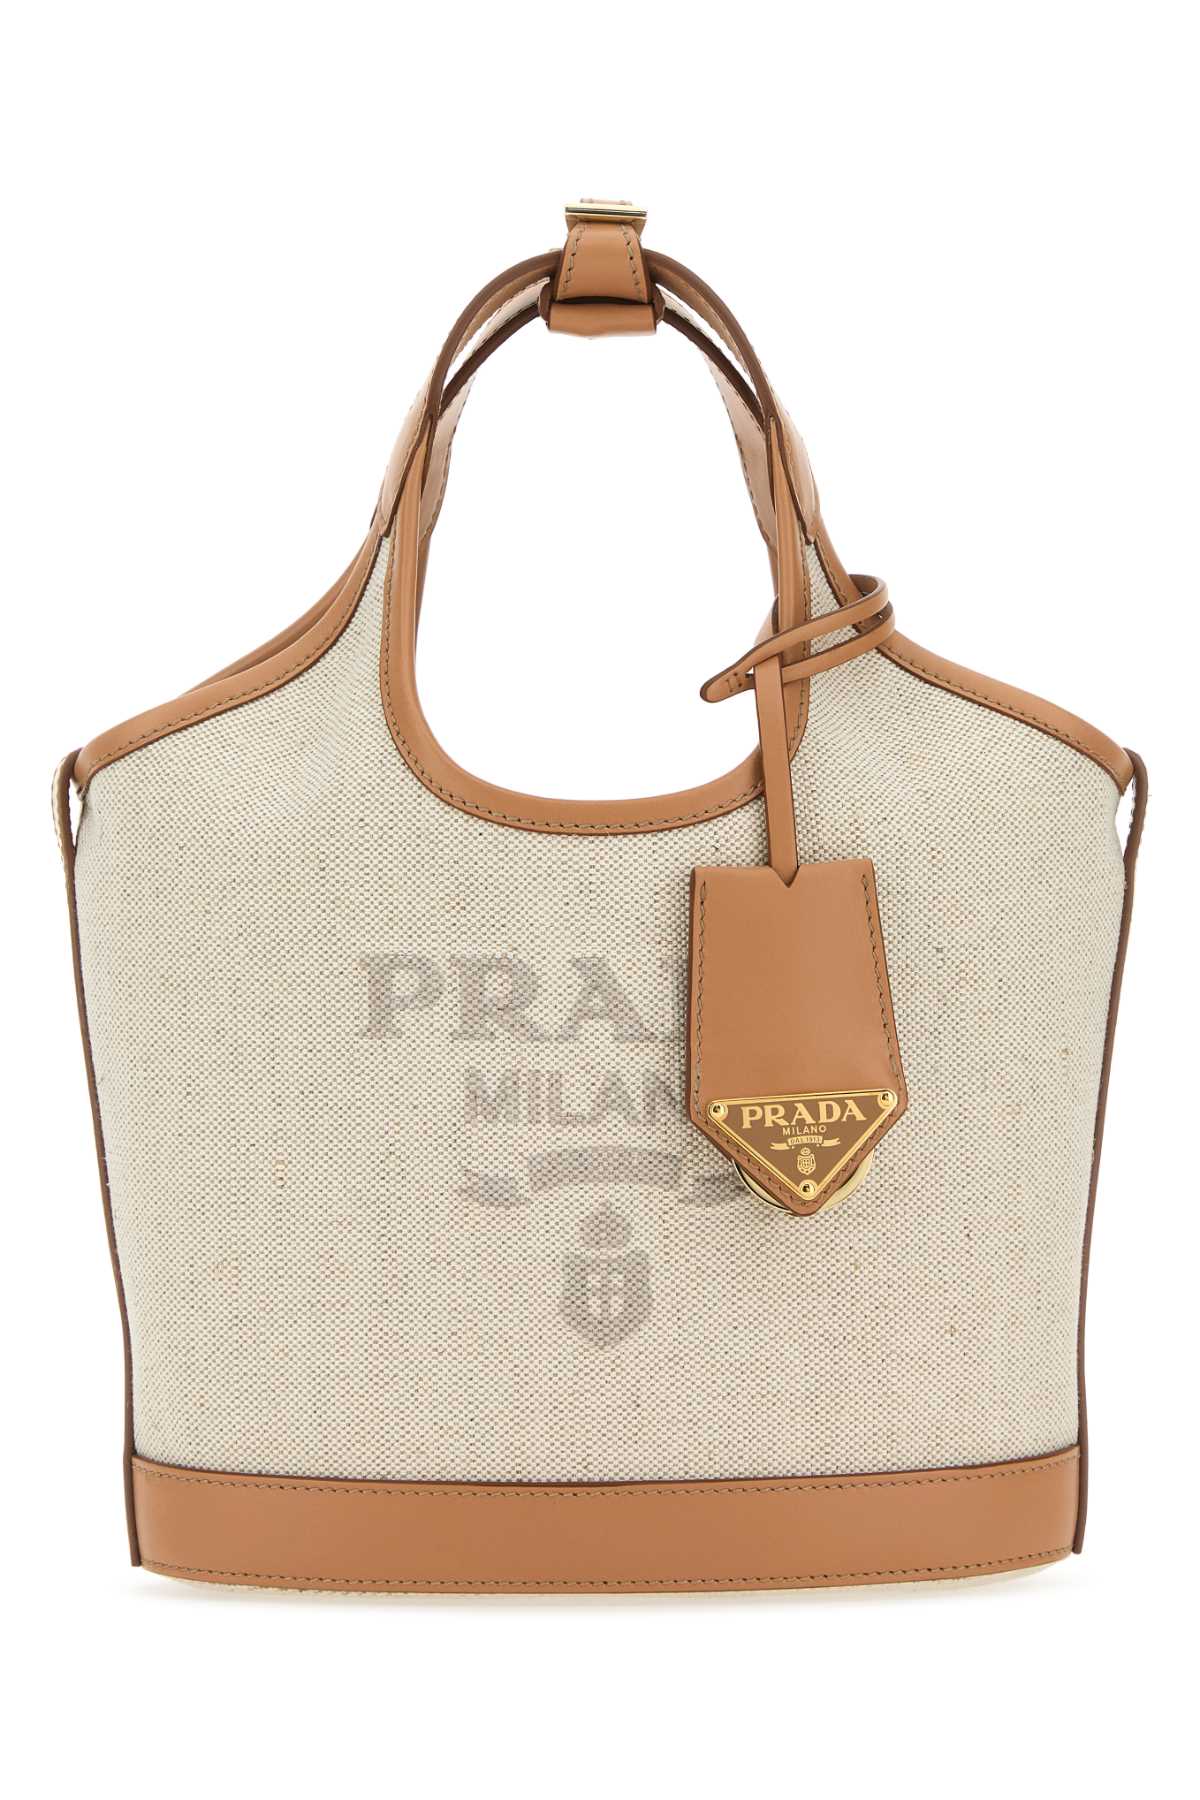 Prada Sand Canvas Handbag